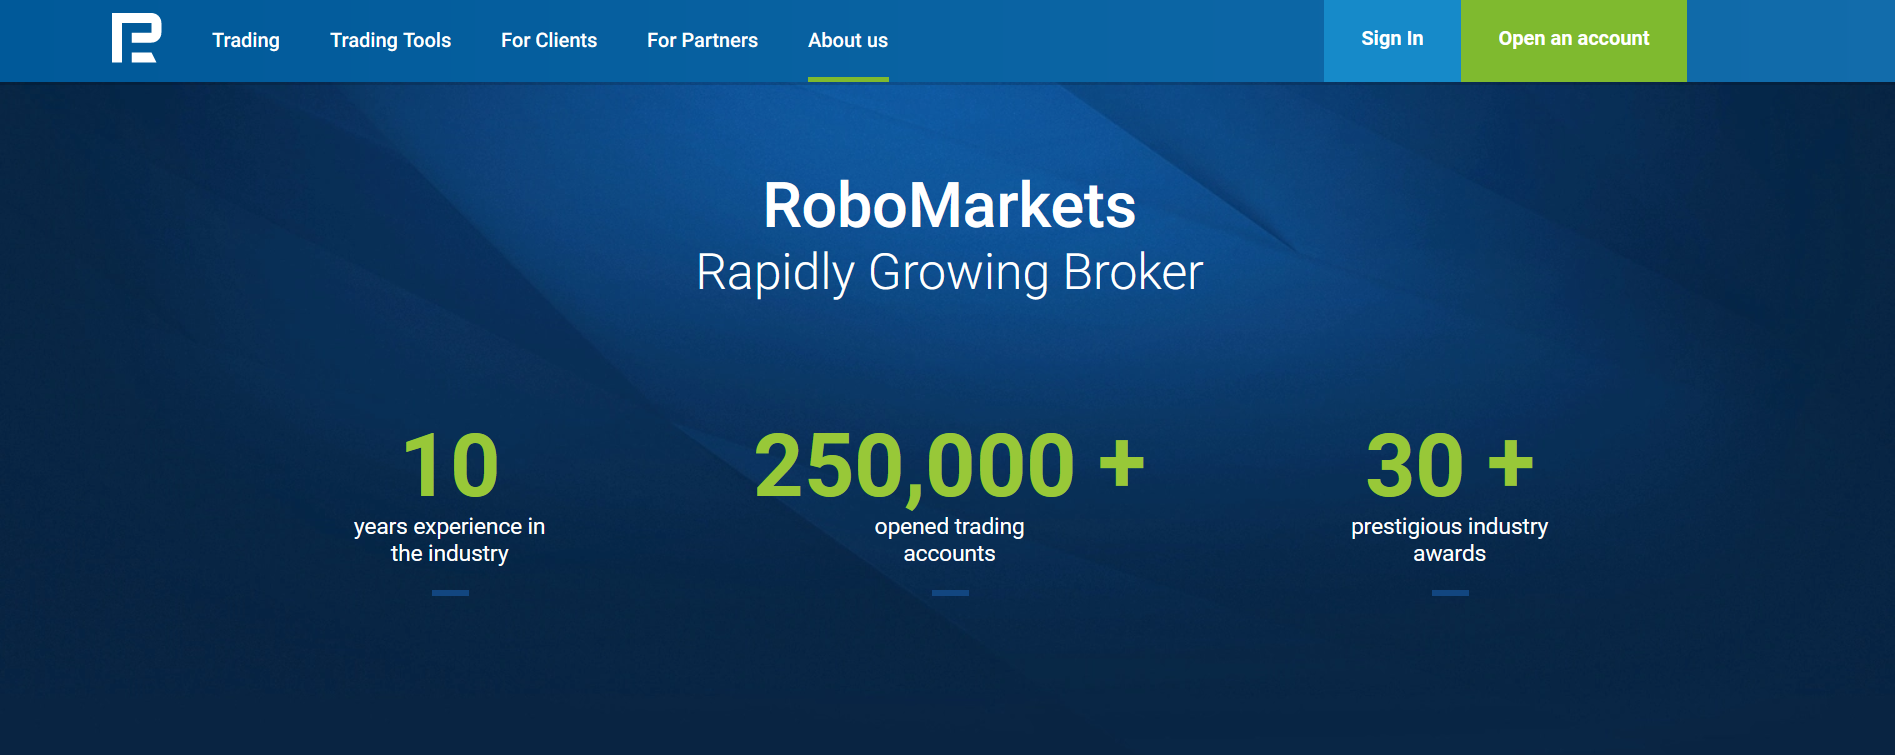 RoboMarkets website